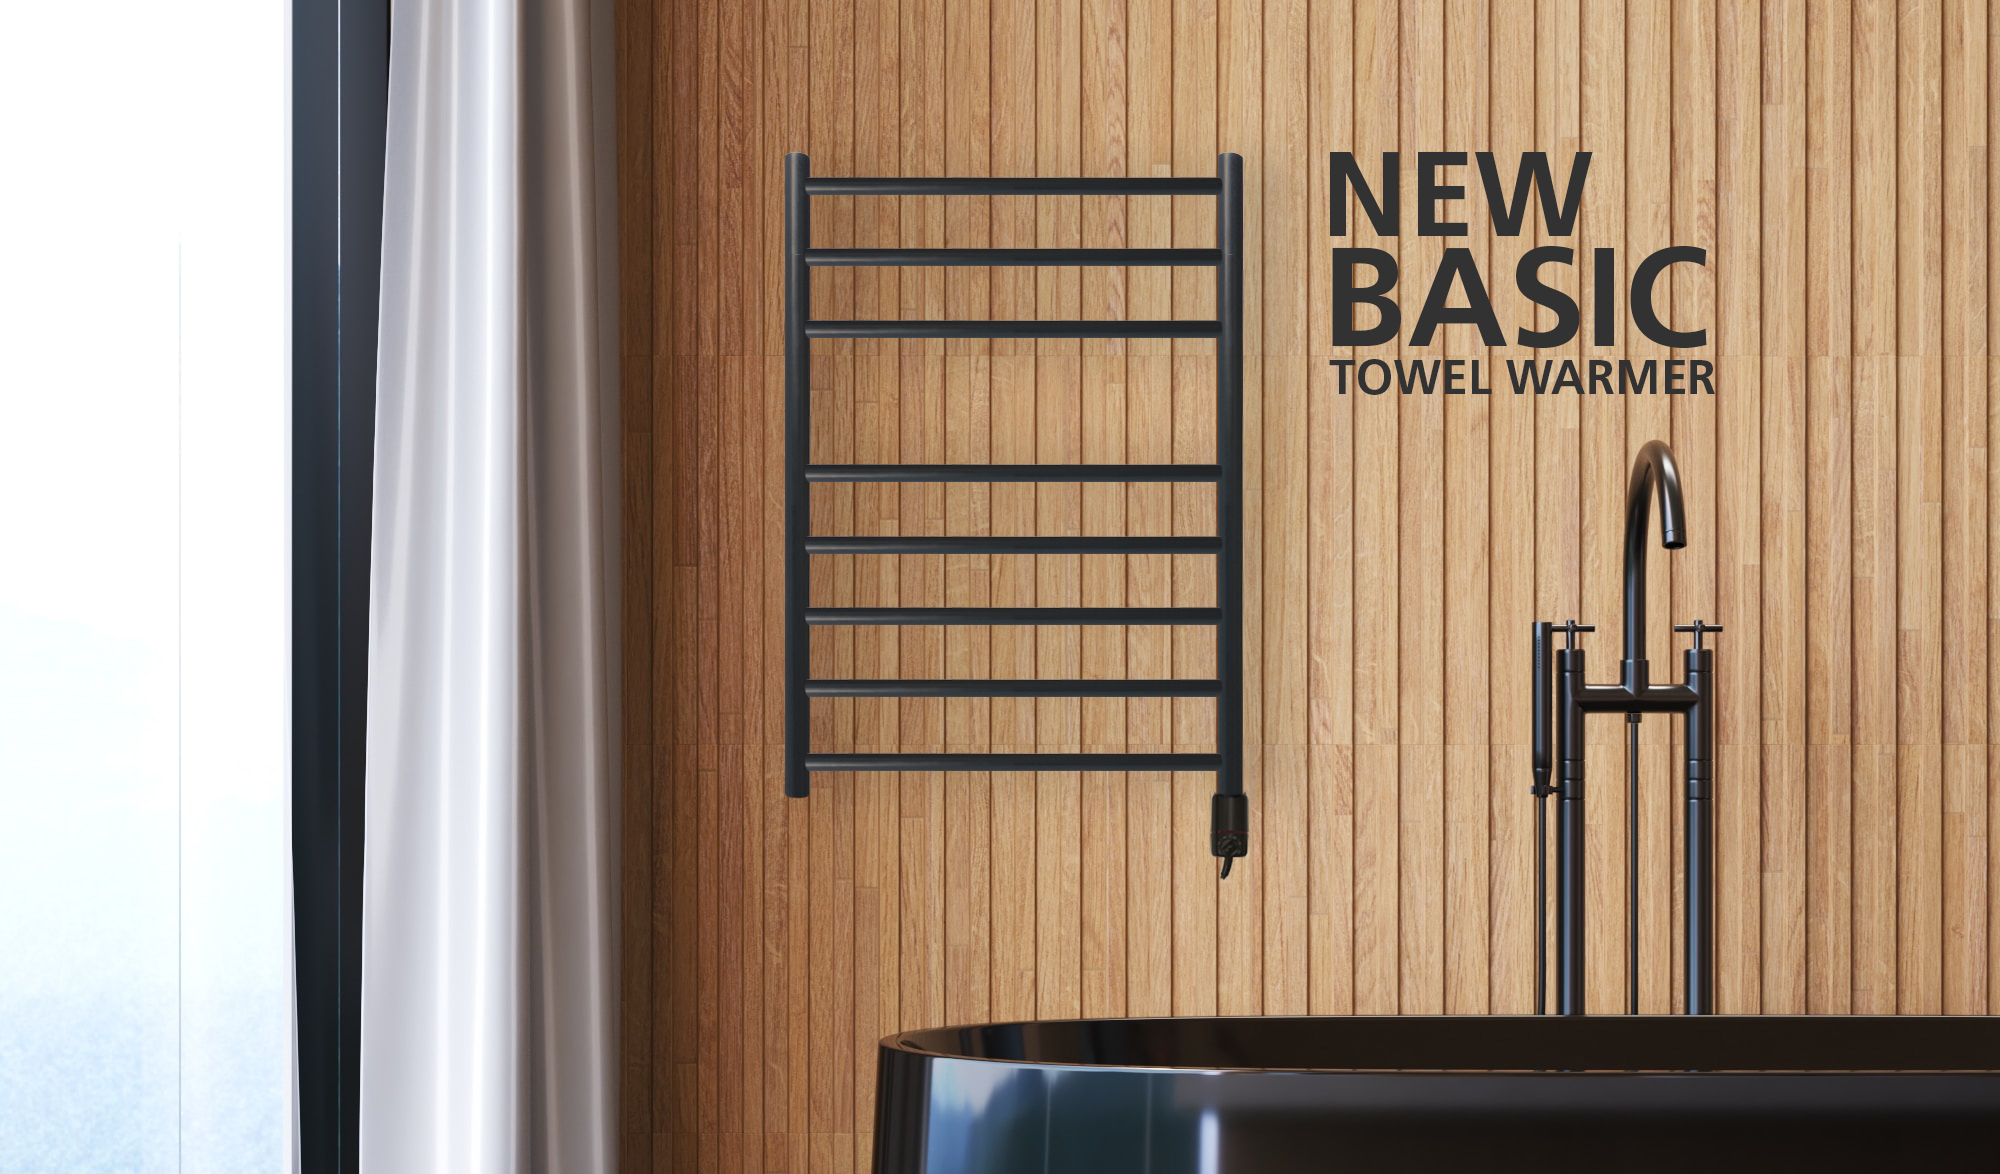 Towel warmer New Basic